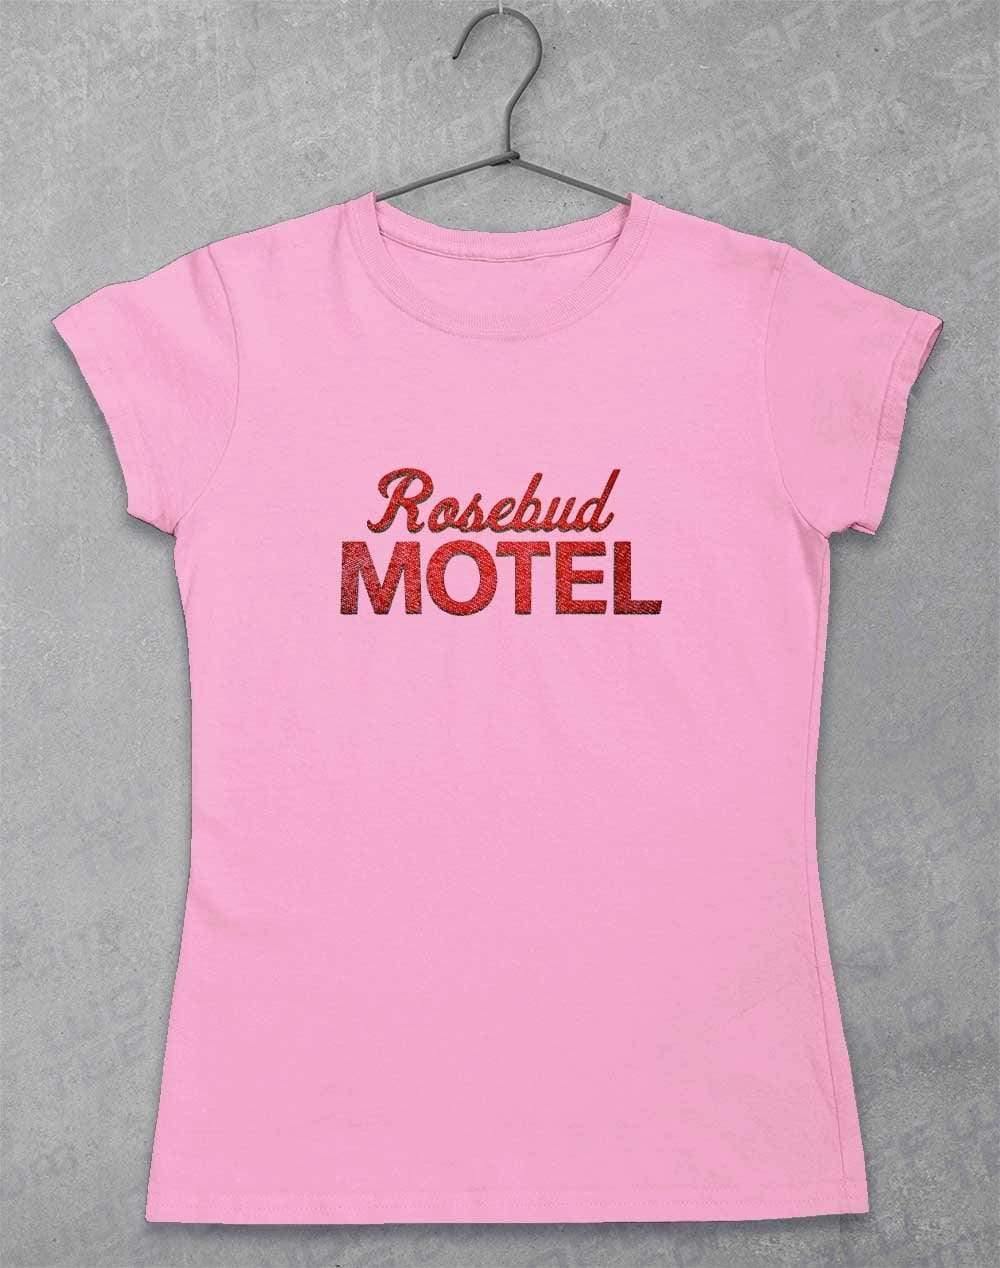 Rosebud Motel Womens T-Shirt 8-10 / Light Pink  - Off World Tees